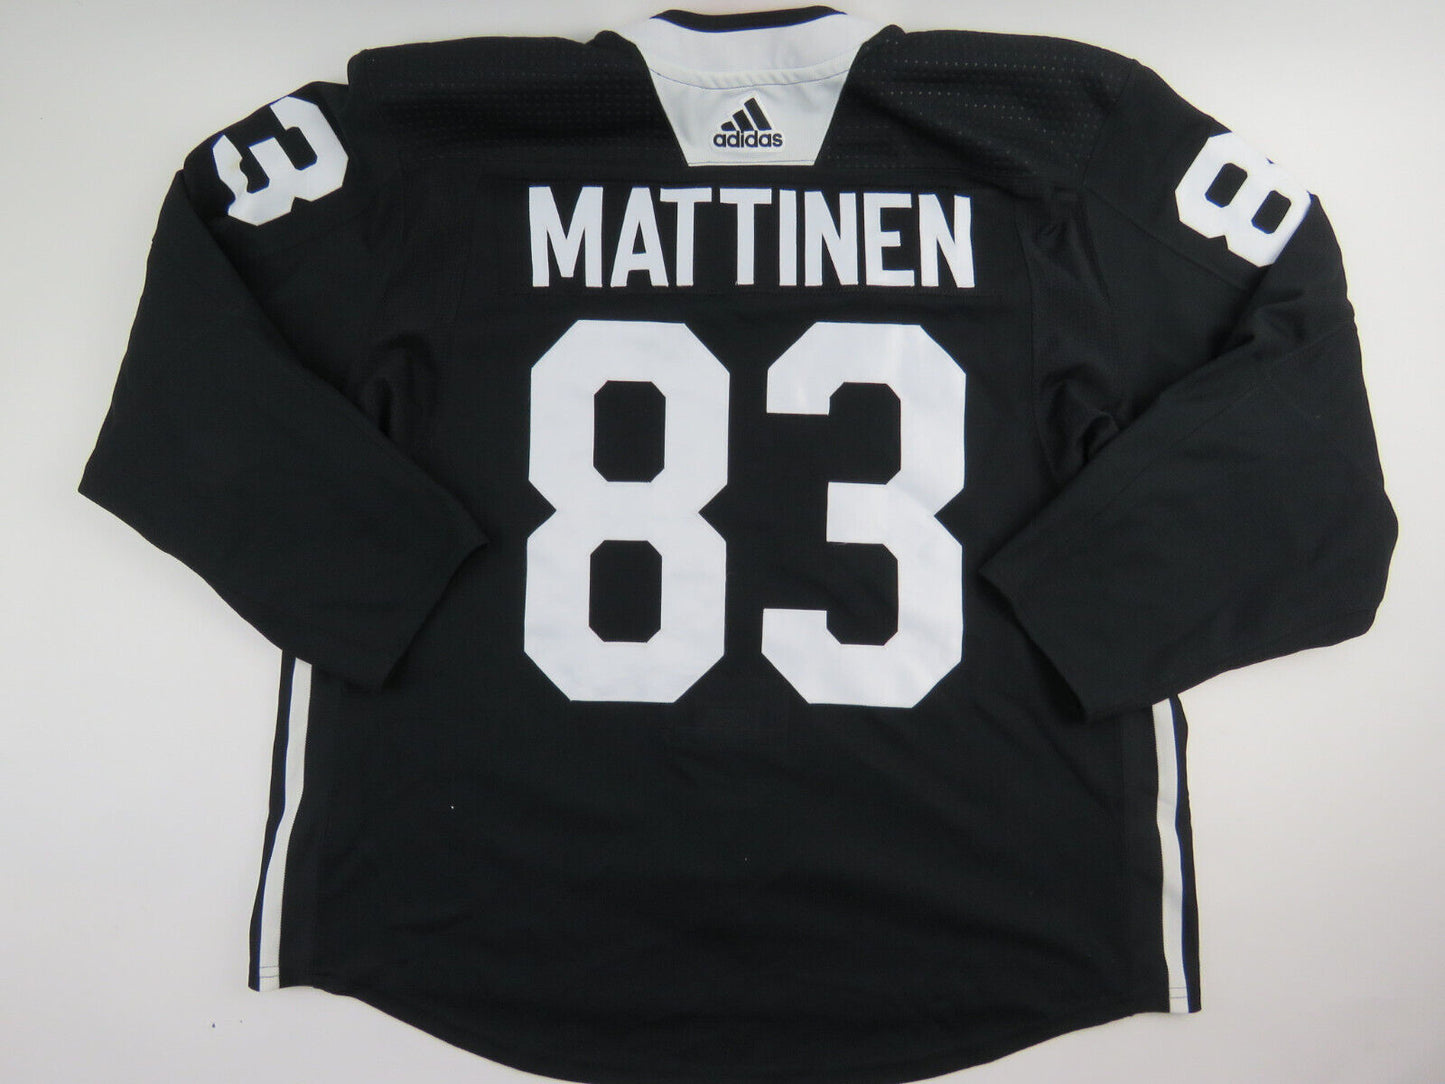 Adidas Toronto Maple Leafs Practice Worn Authentic NHL Hockey Jersey #83 Size 58